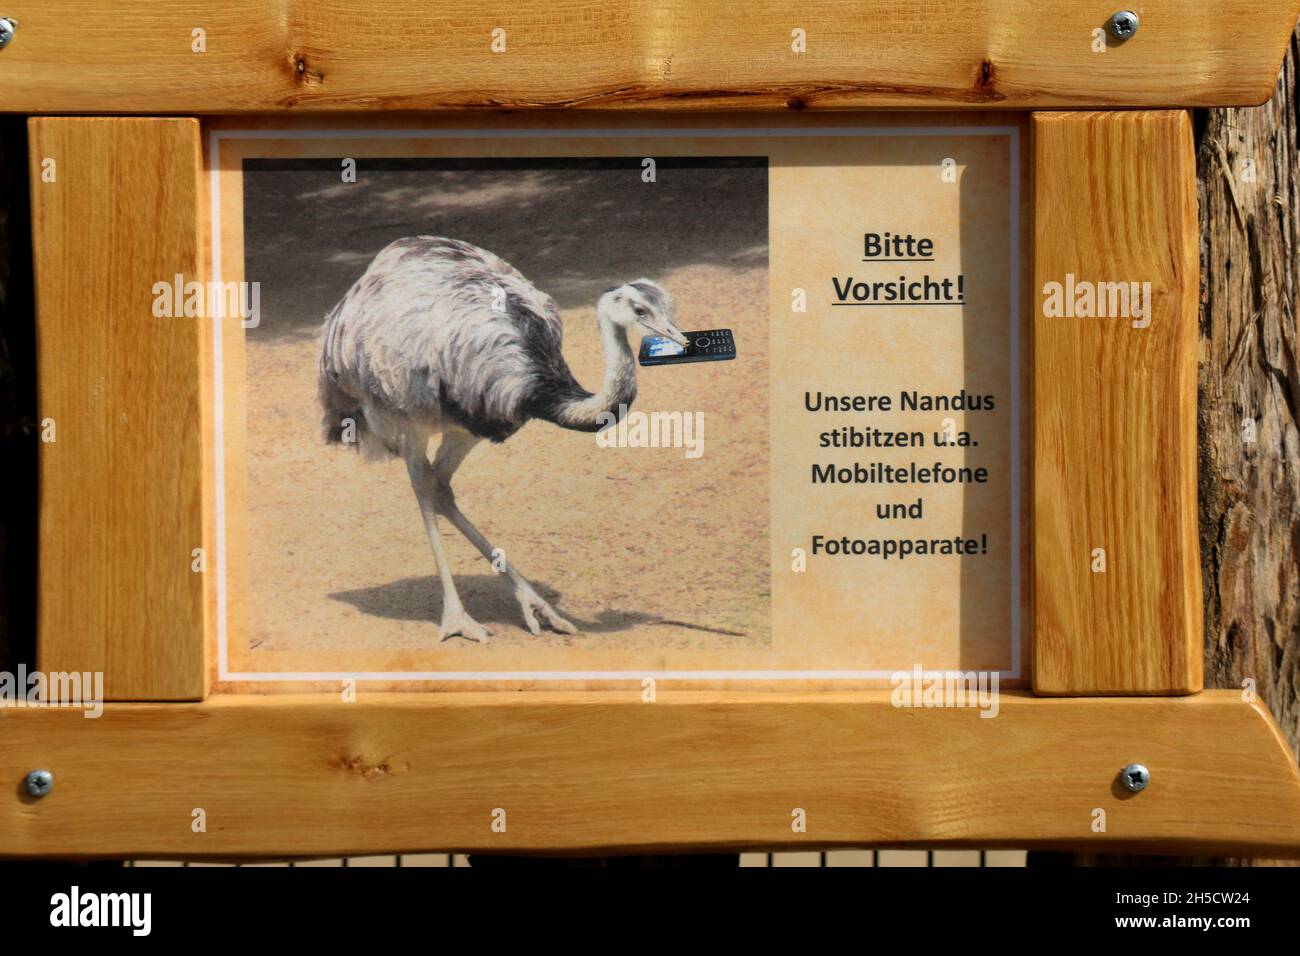 greater rhea (Rhea americana), warning sign of greater rheas at an enclosure, Germany Stock Photo